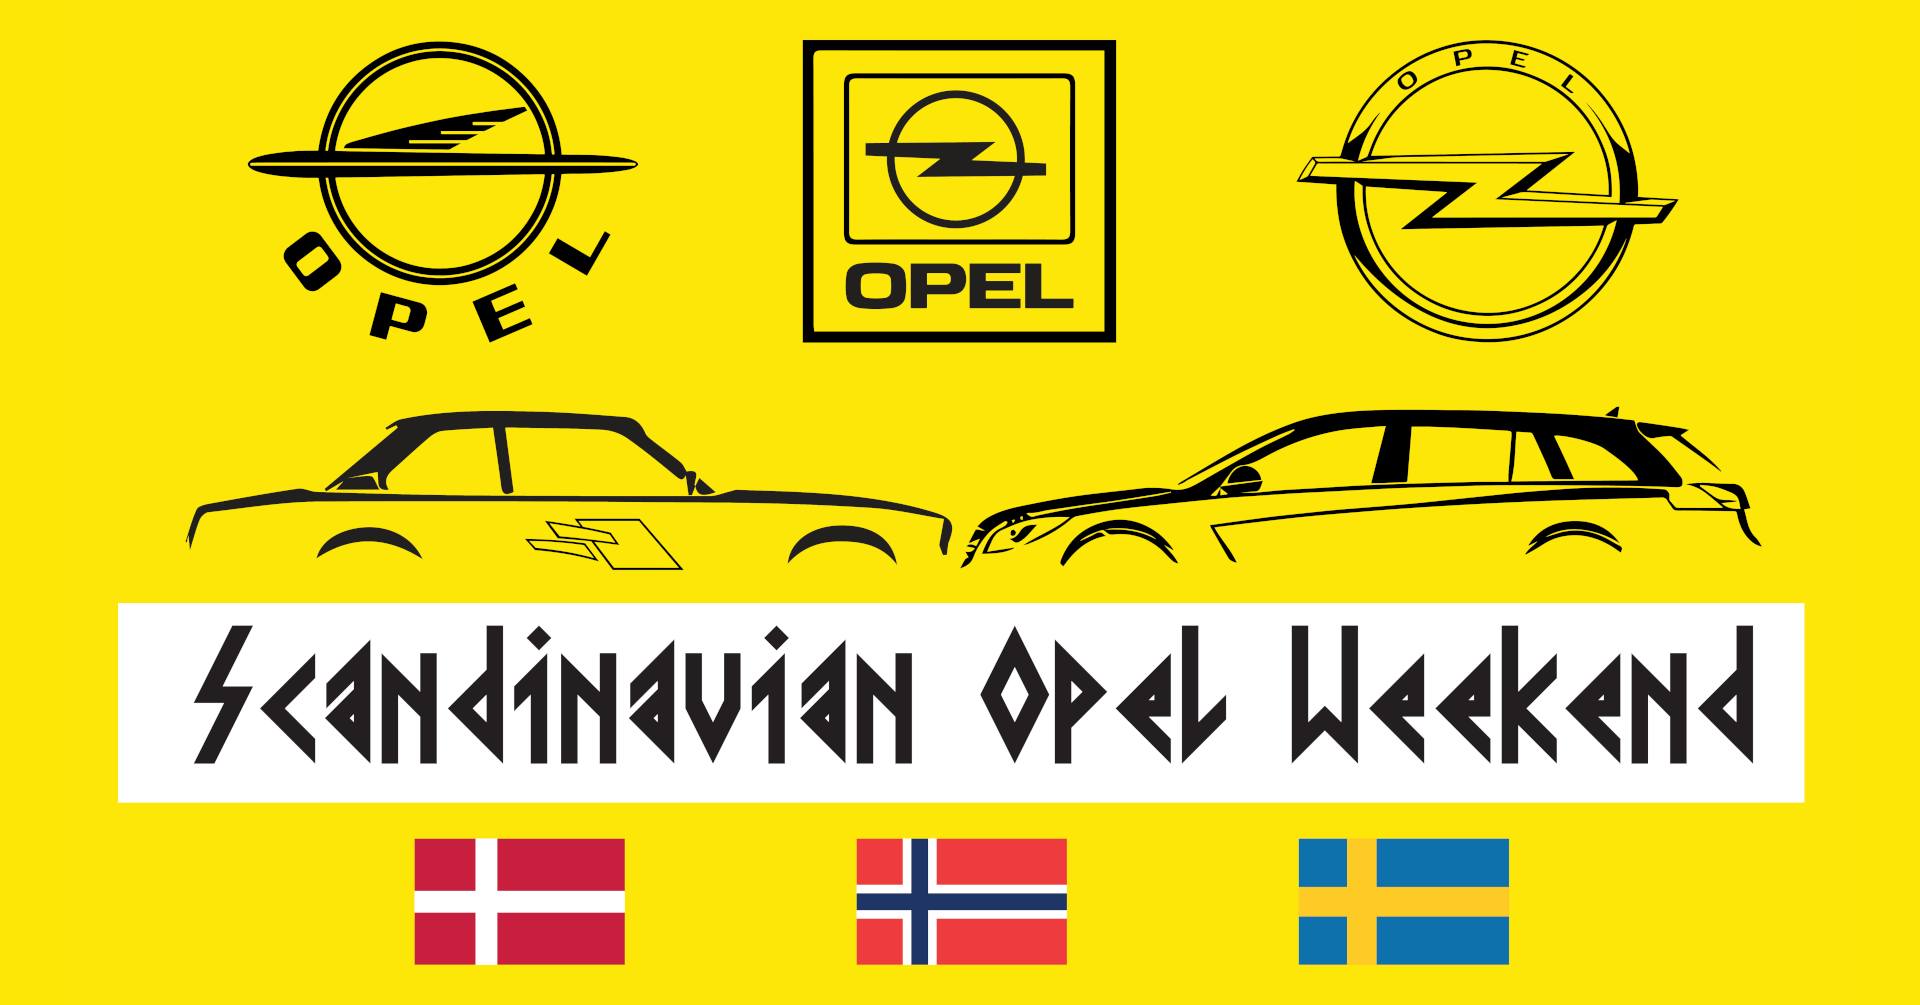 Scandinavian Opel Weekend - Racelens